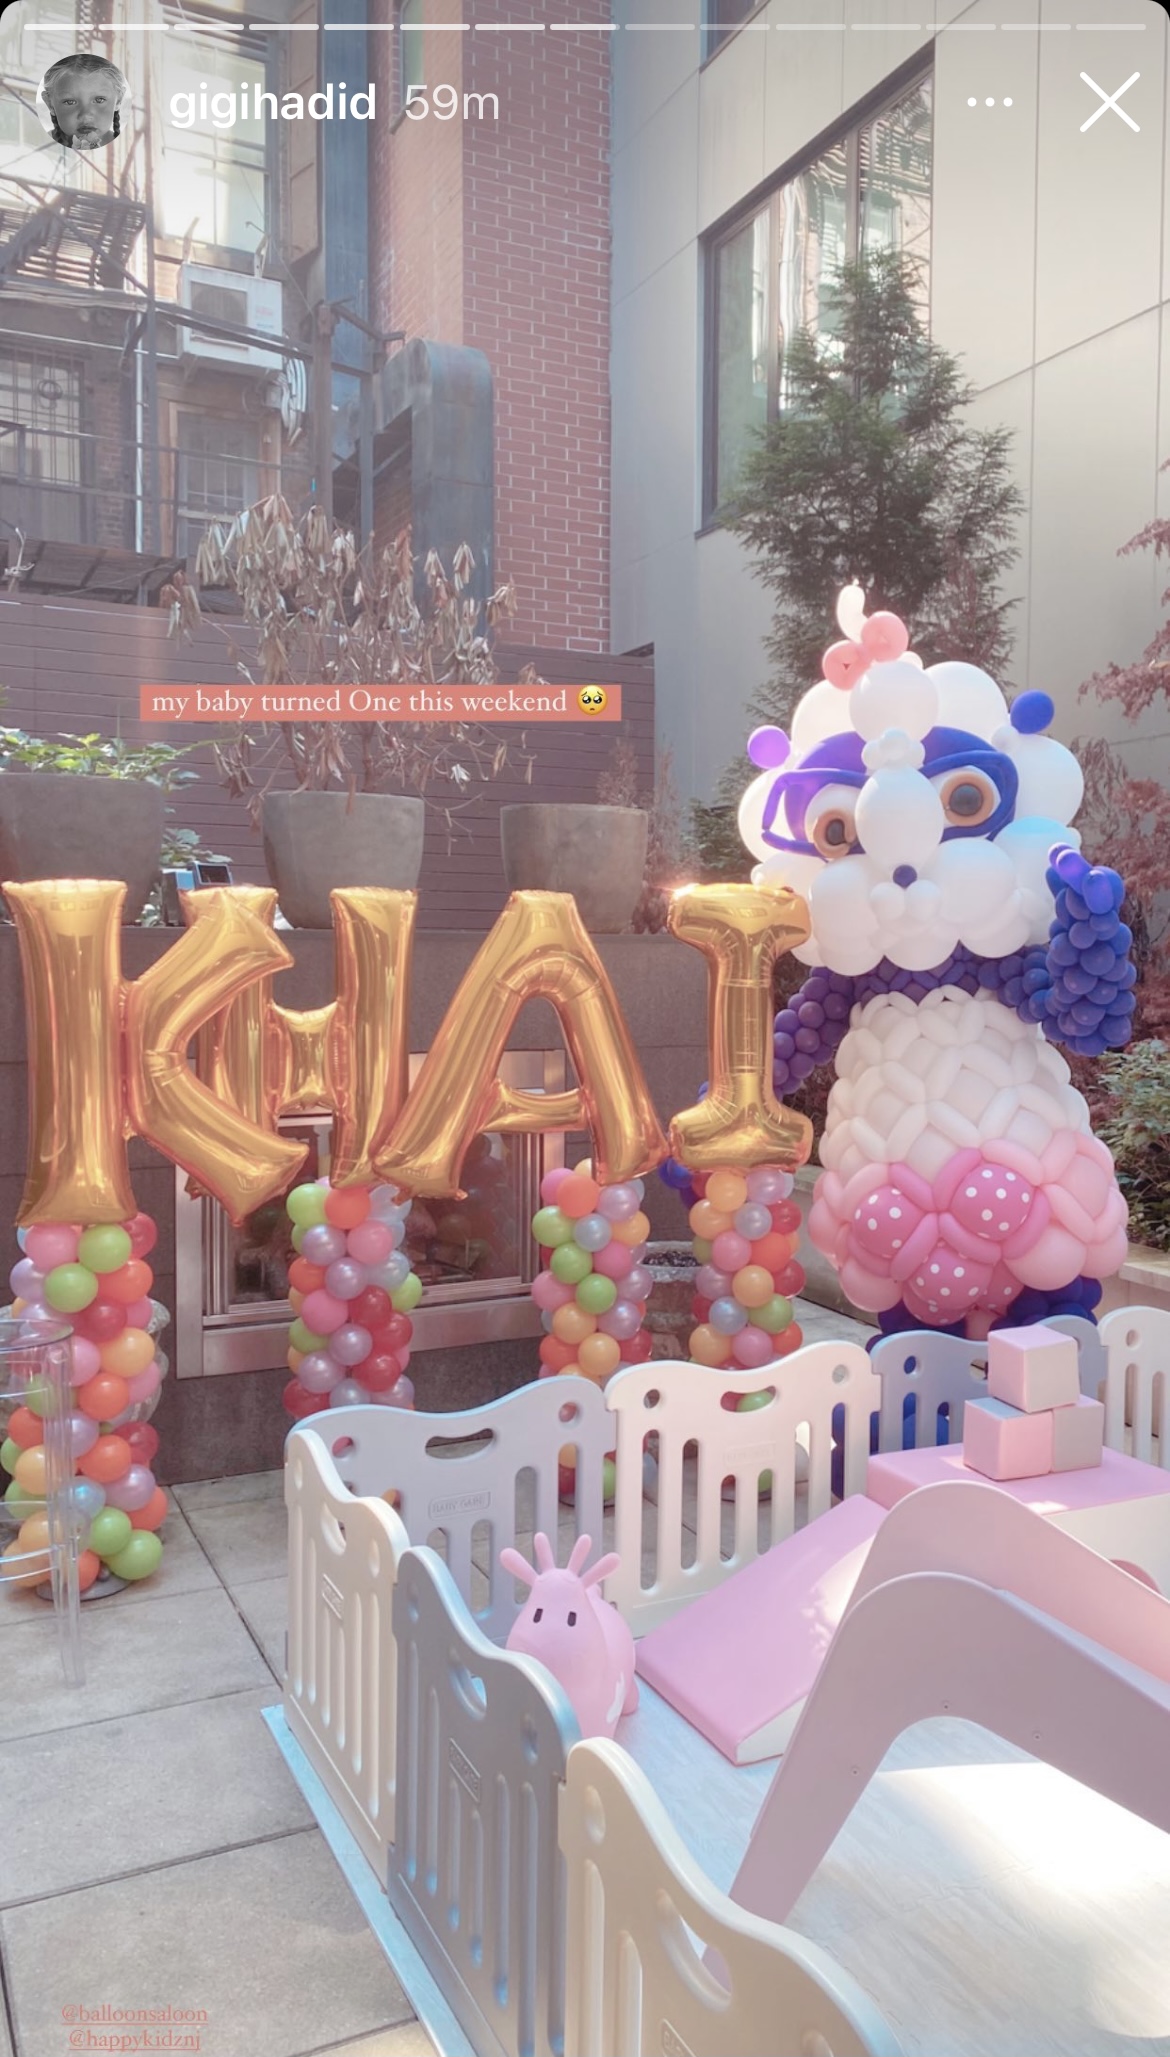 Khai, Zayn Malik and Gigi Hadid's daughter celebrated her first birthday